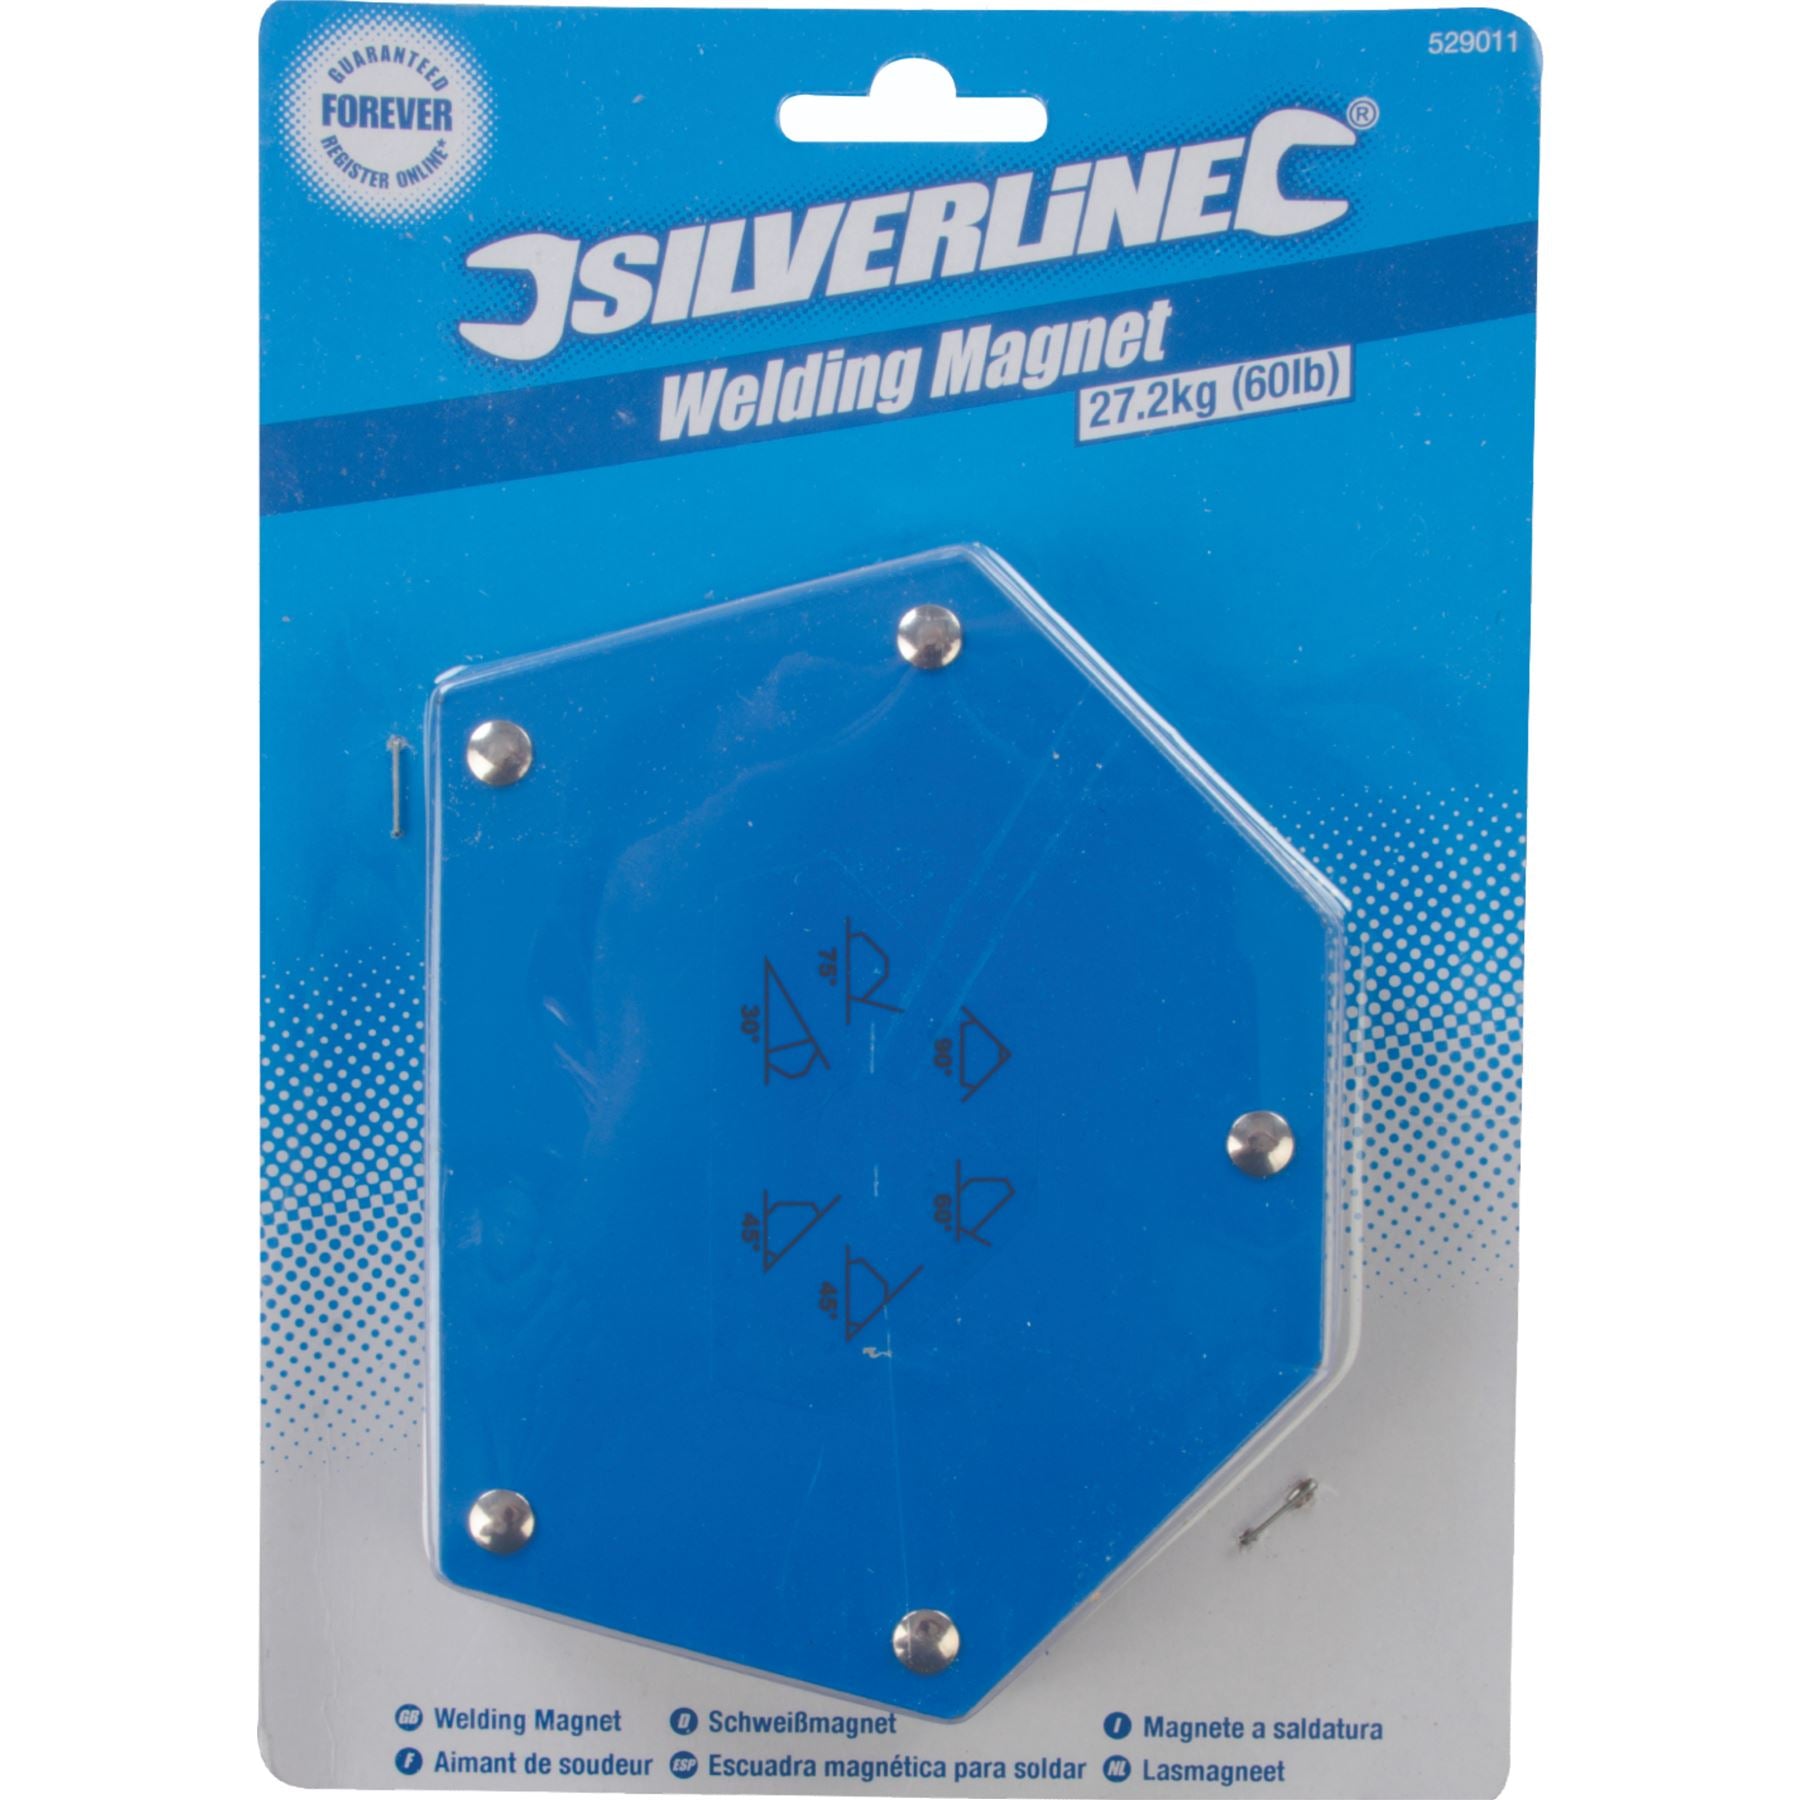 Silverline Welding Magnet Right Angle Holder Soldering Durable 40lb & 60lb